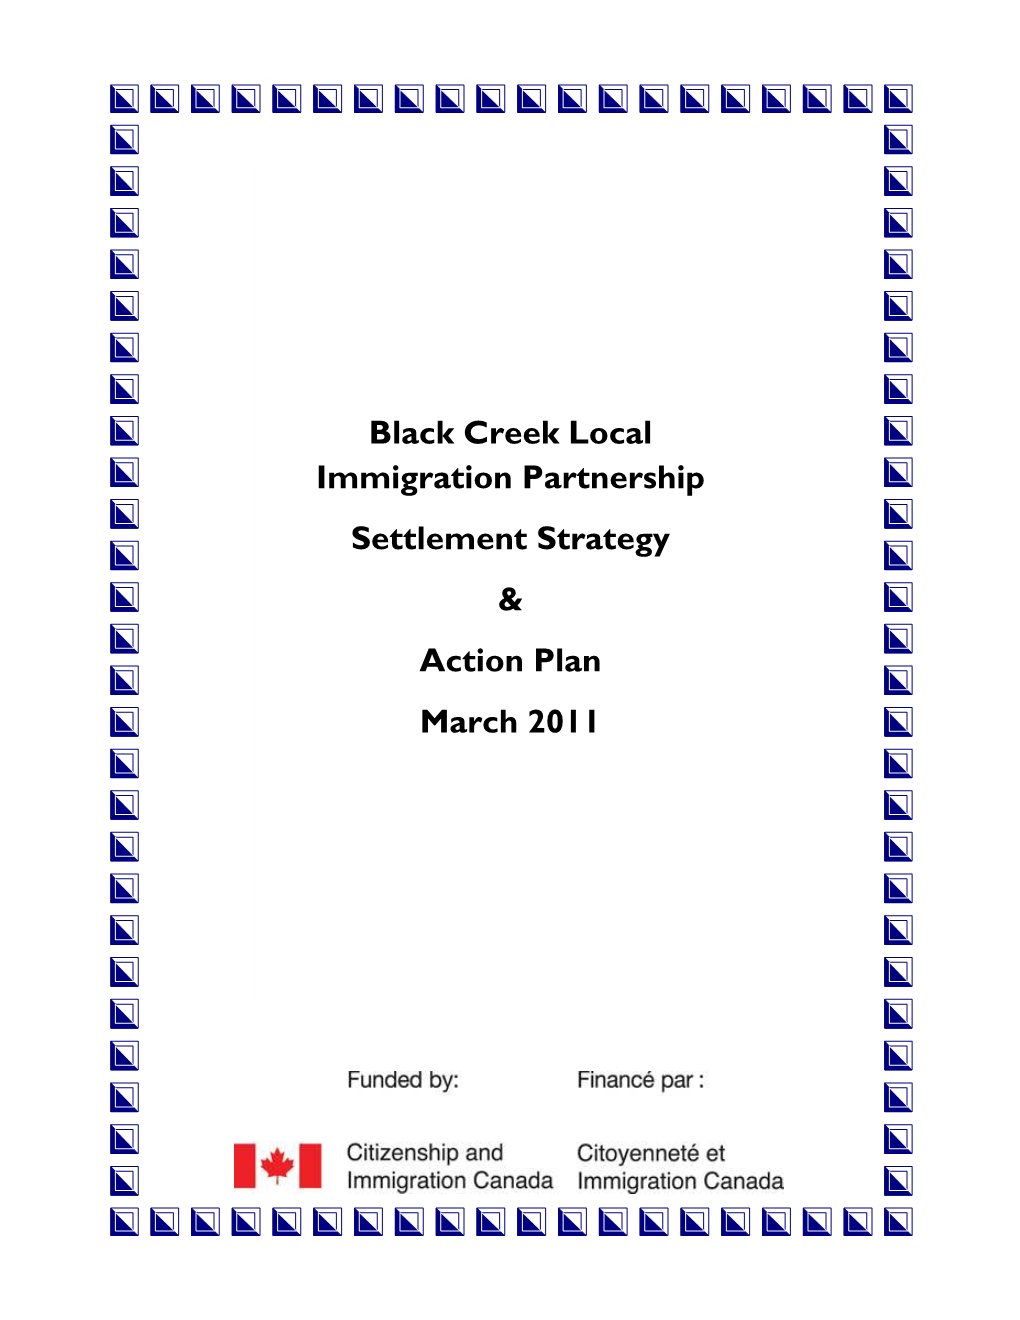 Black Creek LIP Settlement Strategy & Action Plan